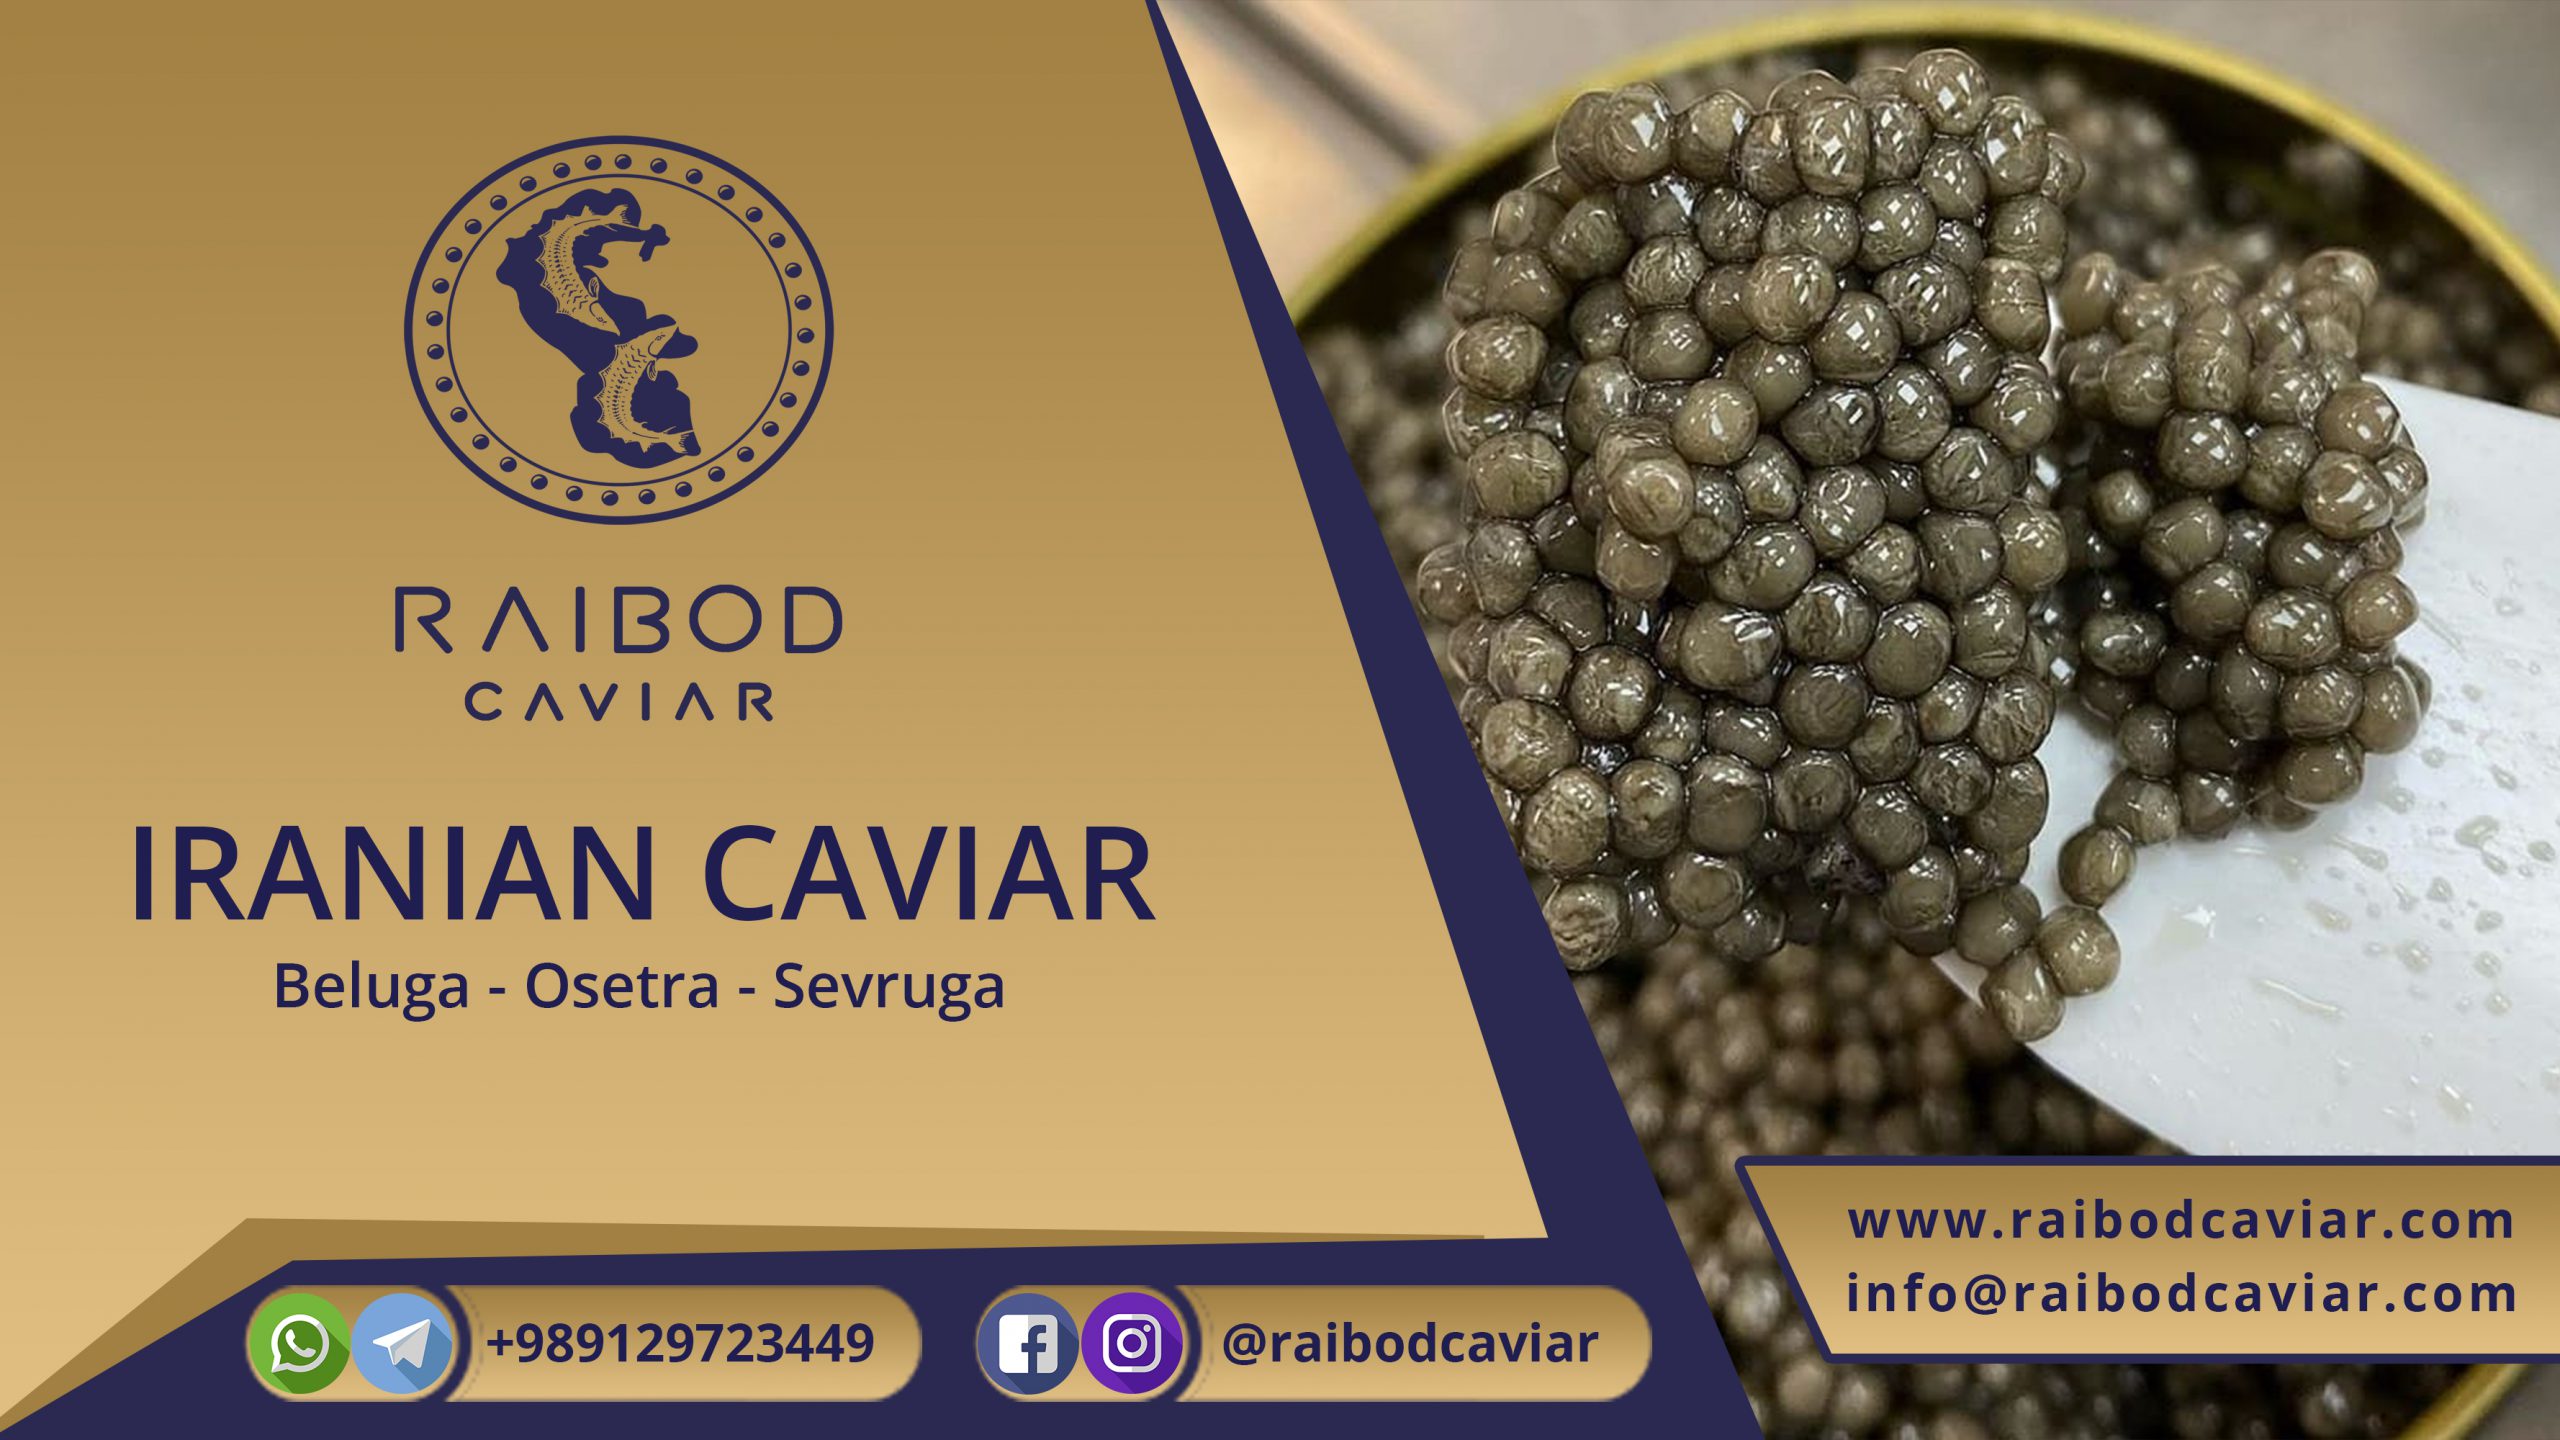 Major caviar sales centers